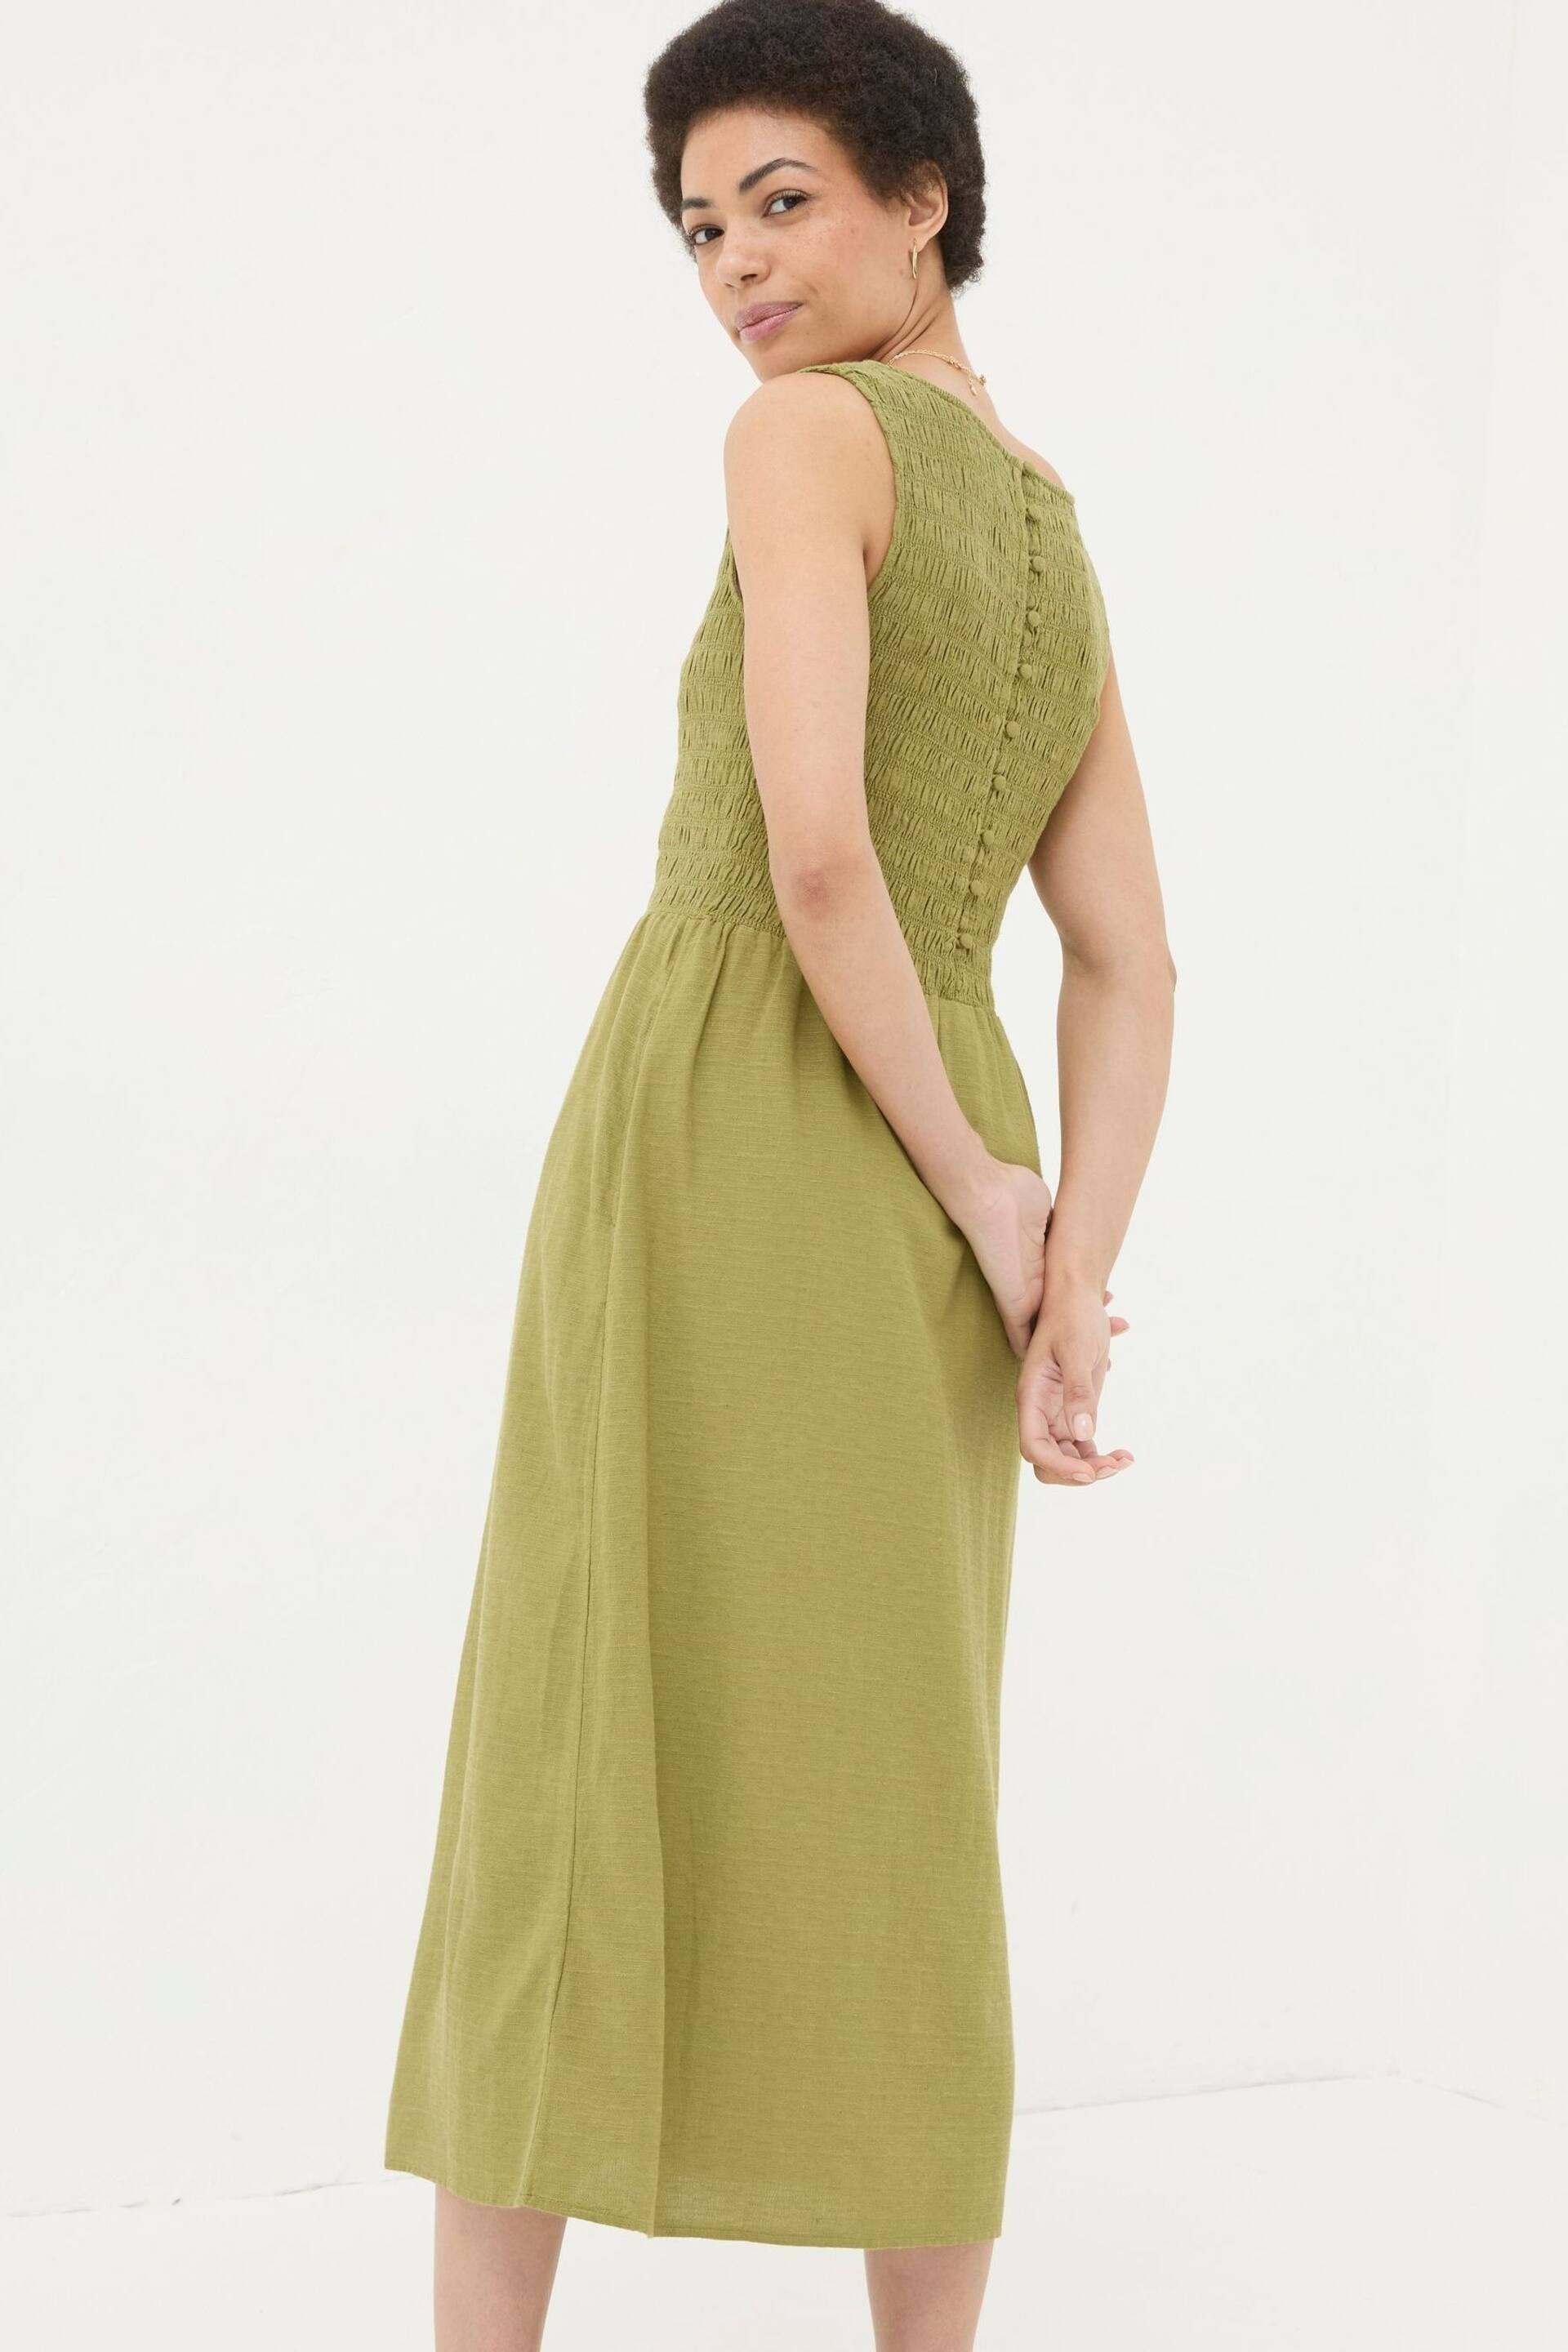 FatFace Green Aria Midi Dress - Image 2 of 5